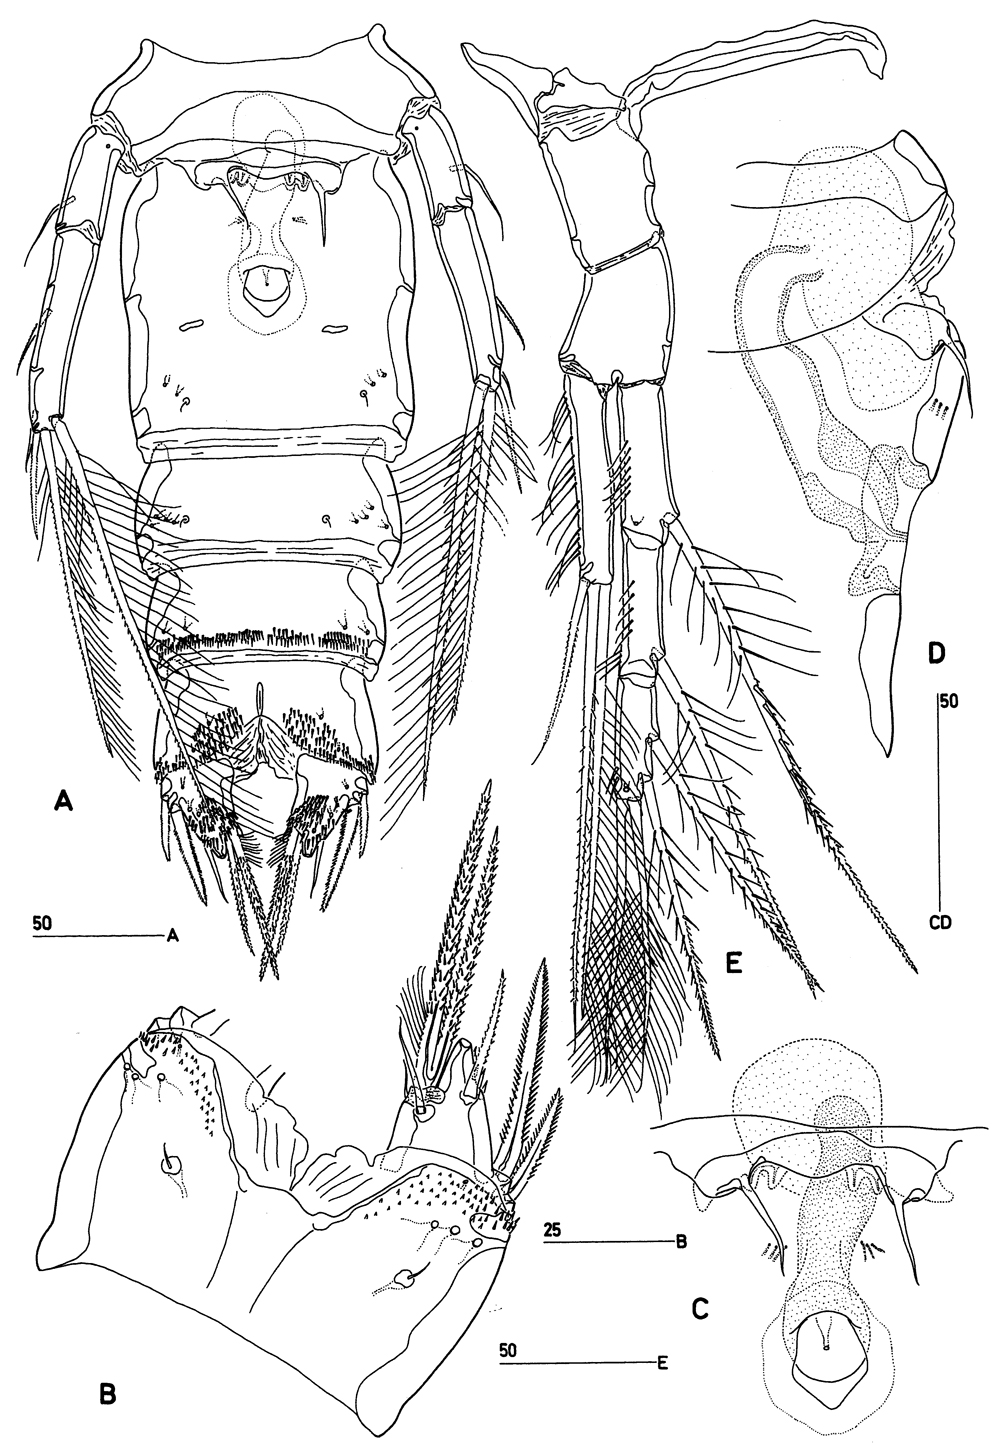 Species Goniopsyllus clausi - Plate 5 of morphological figures